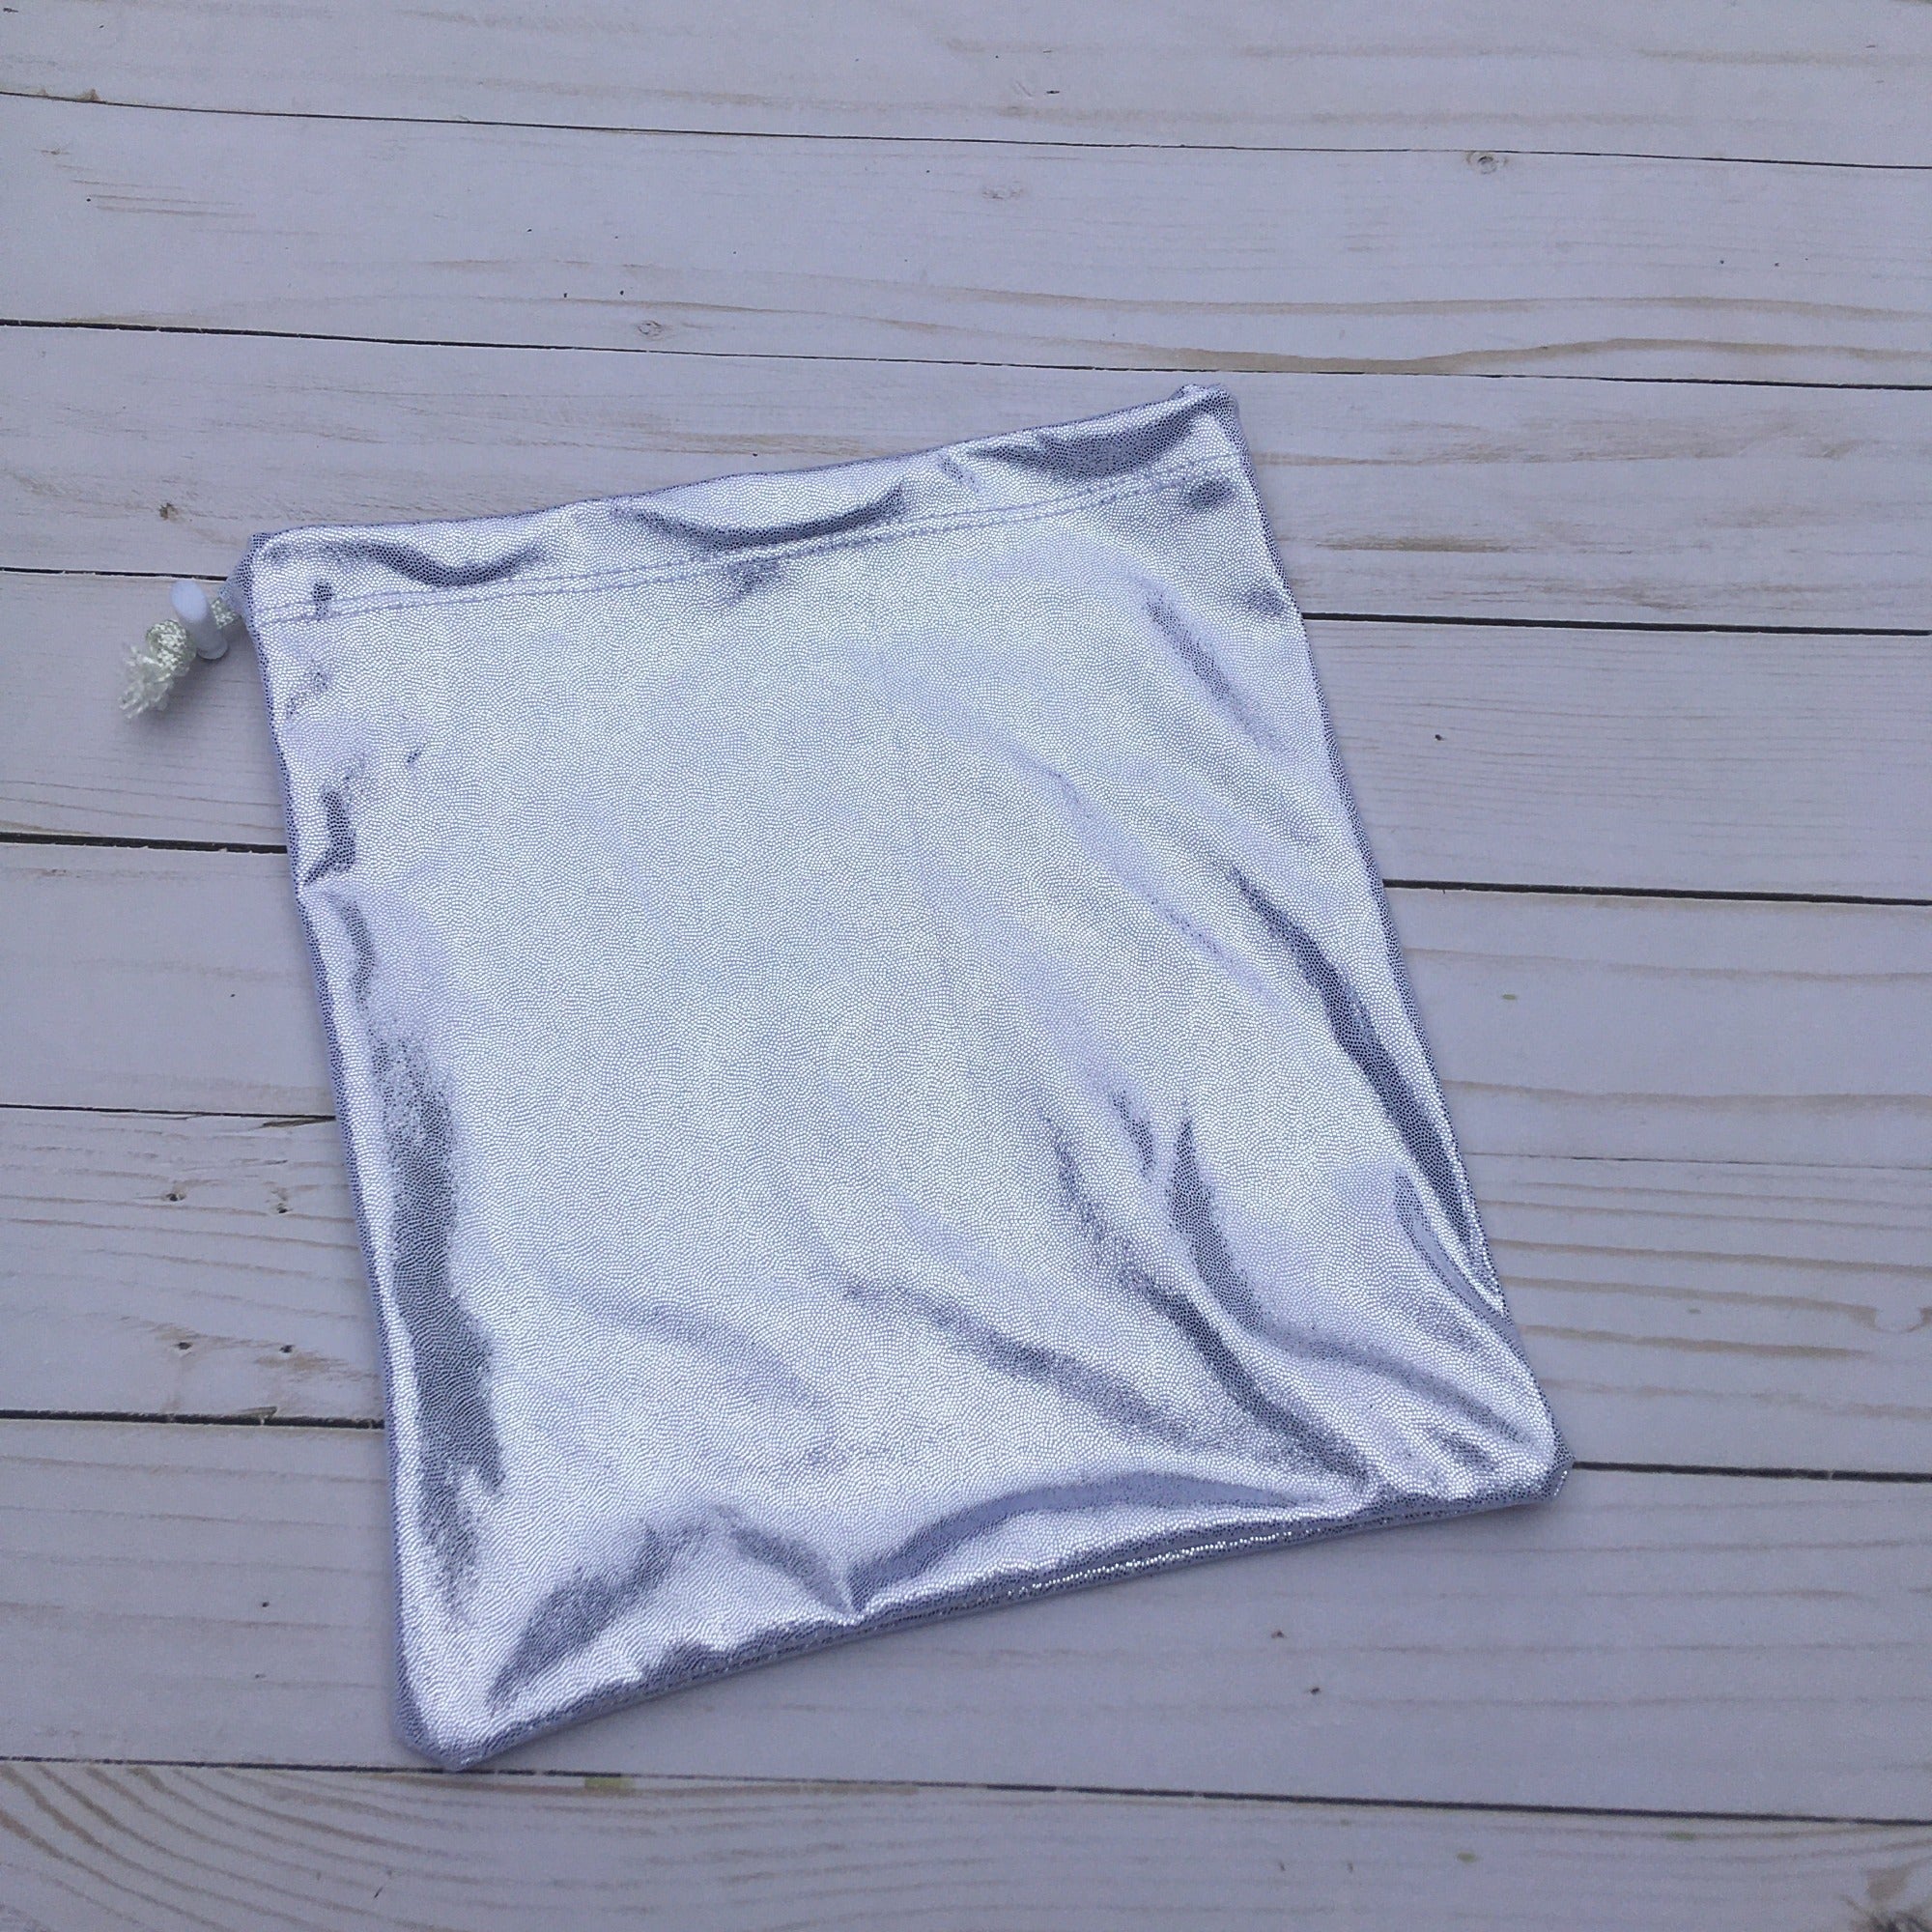 gymnastics grip bag in shiny silver